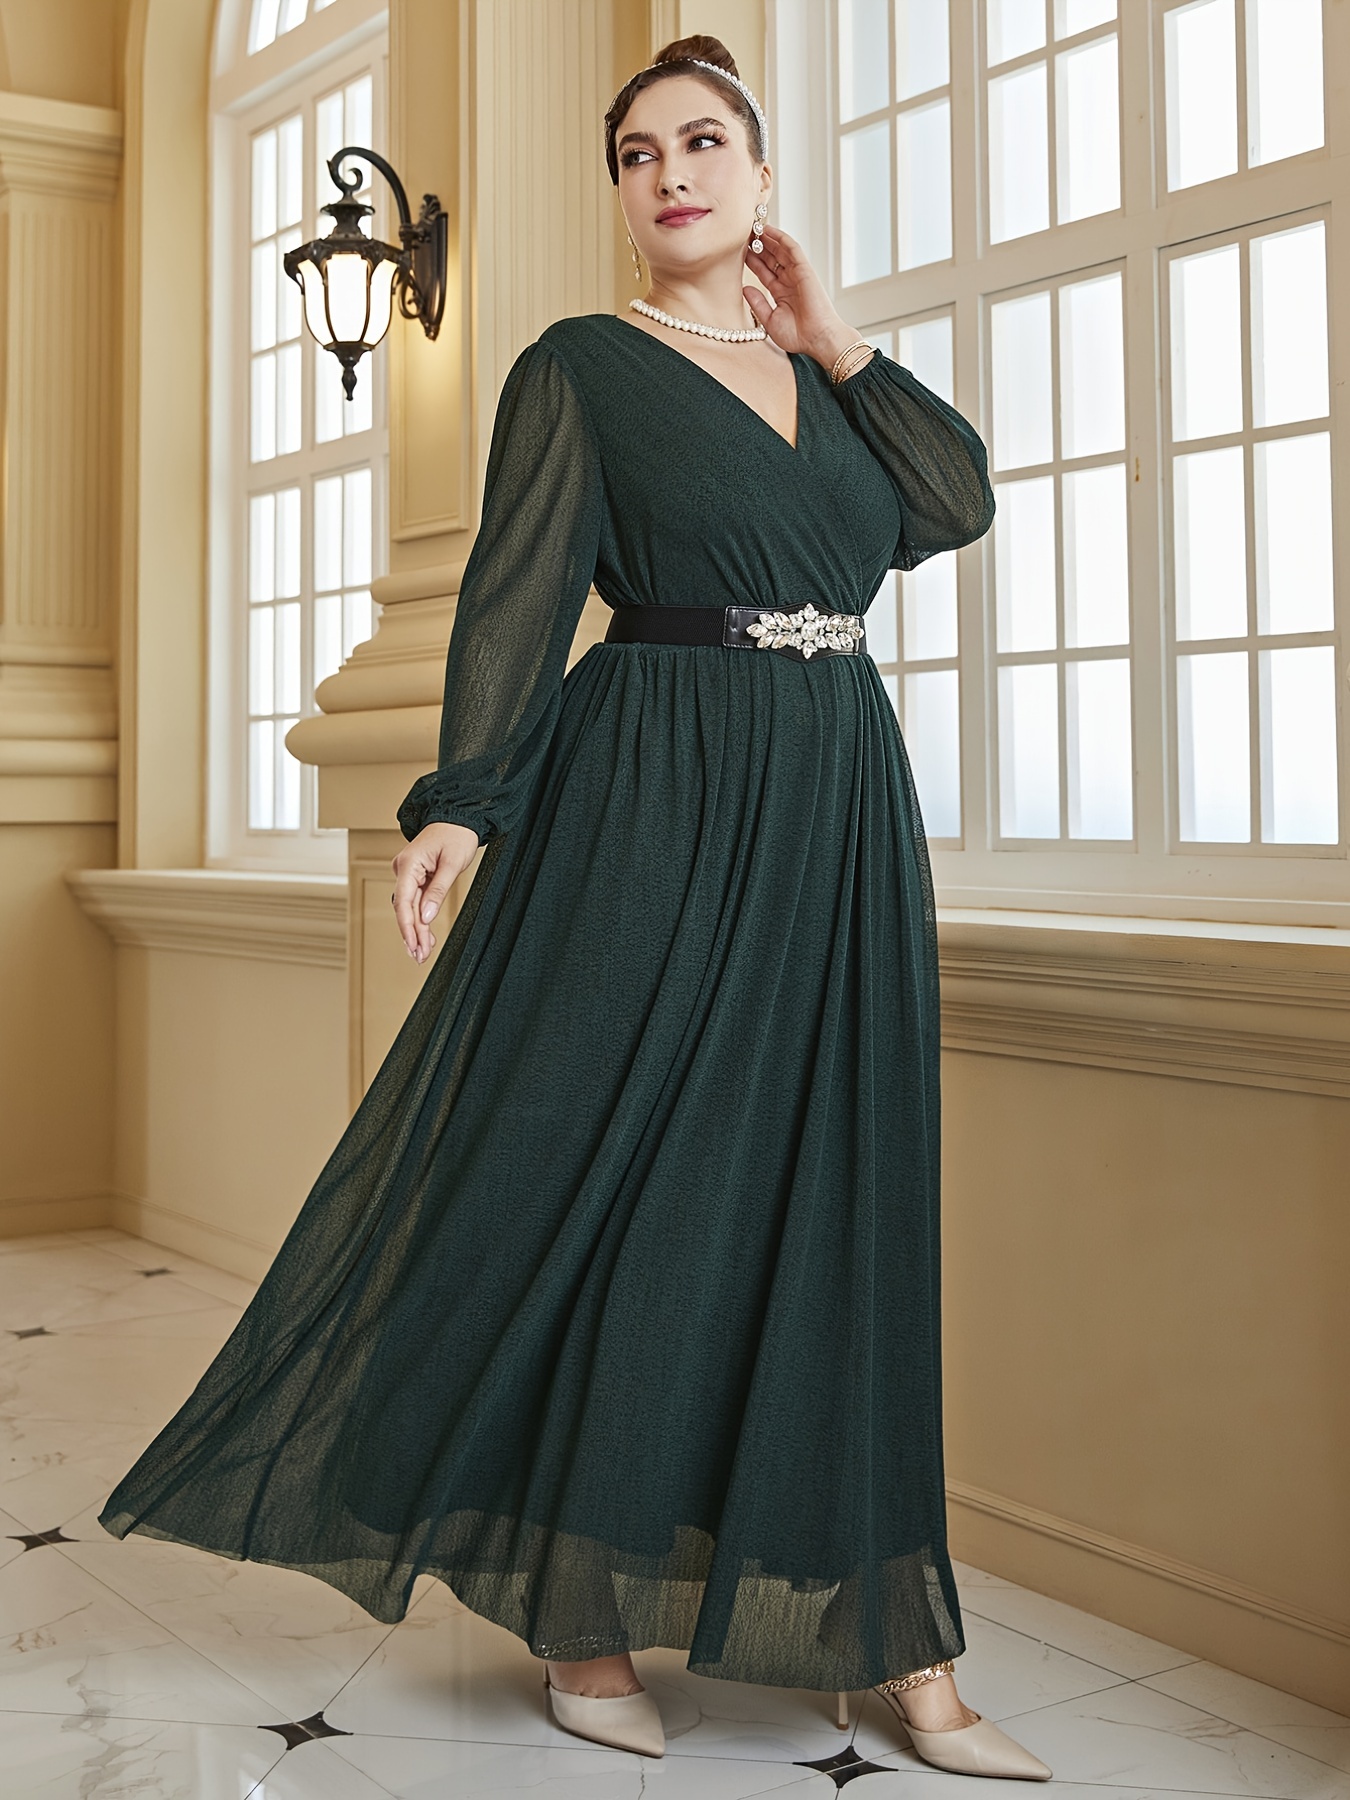 Plus Size Elegant Chiffon V-Neckline Long Sleeve Formal Evening Dress